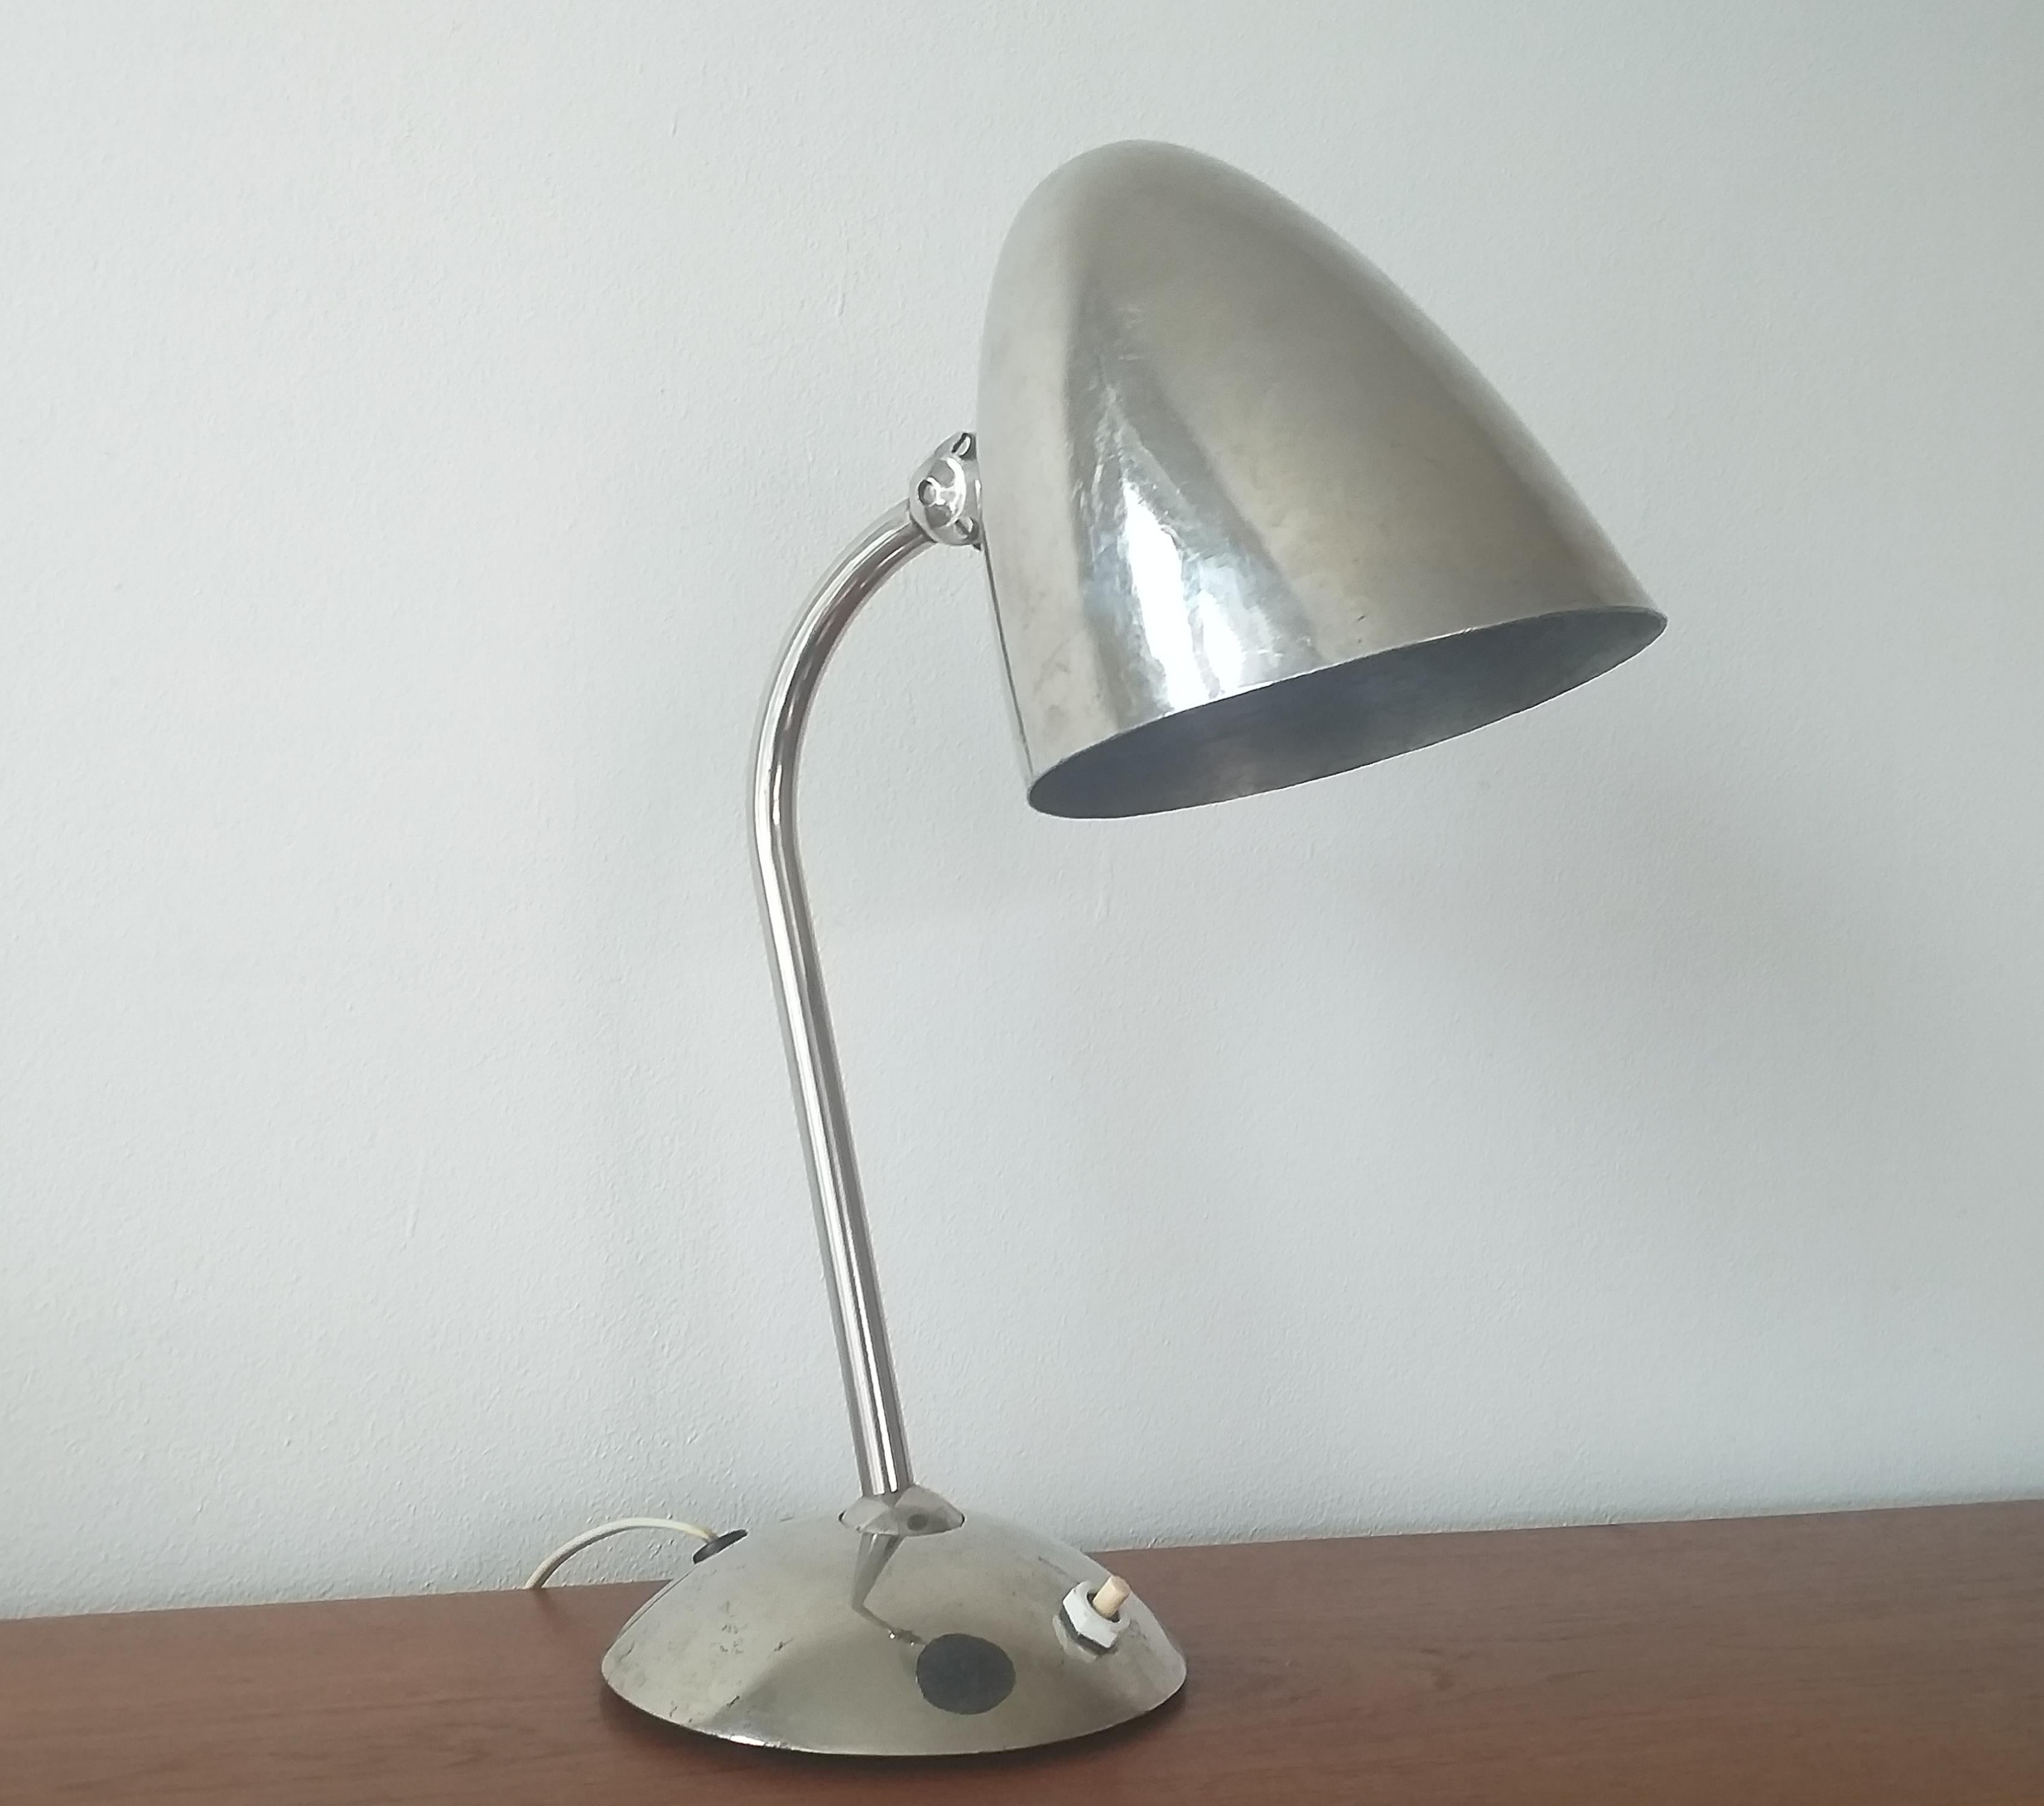 Art Deco, Functionalism, Bauhaus Table Lamp, Franta Anyz, 1930s 4